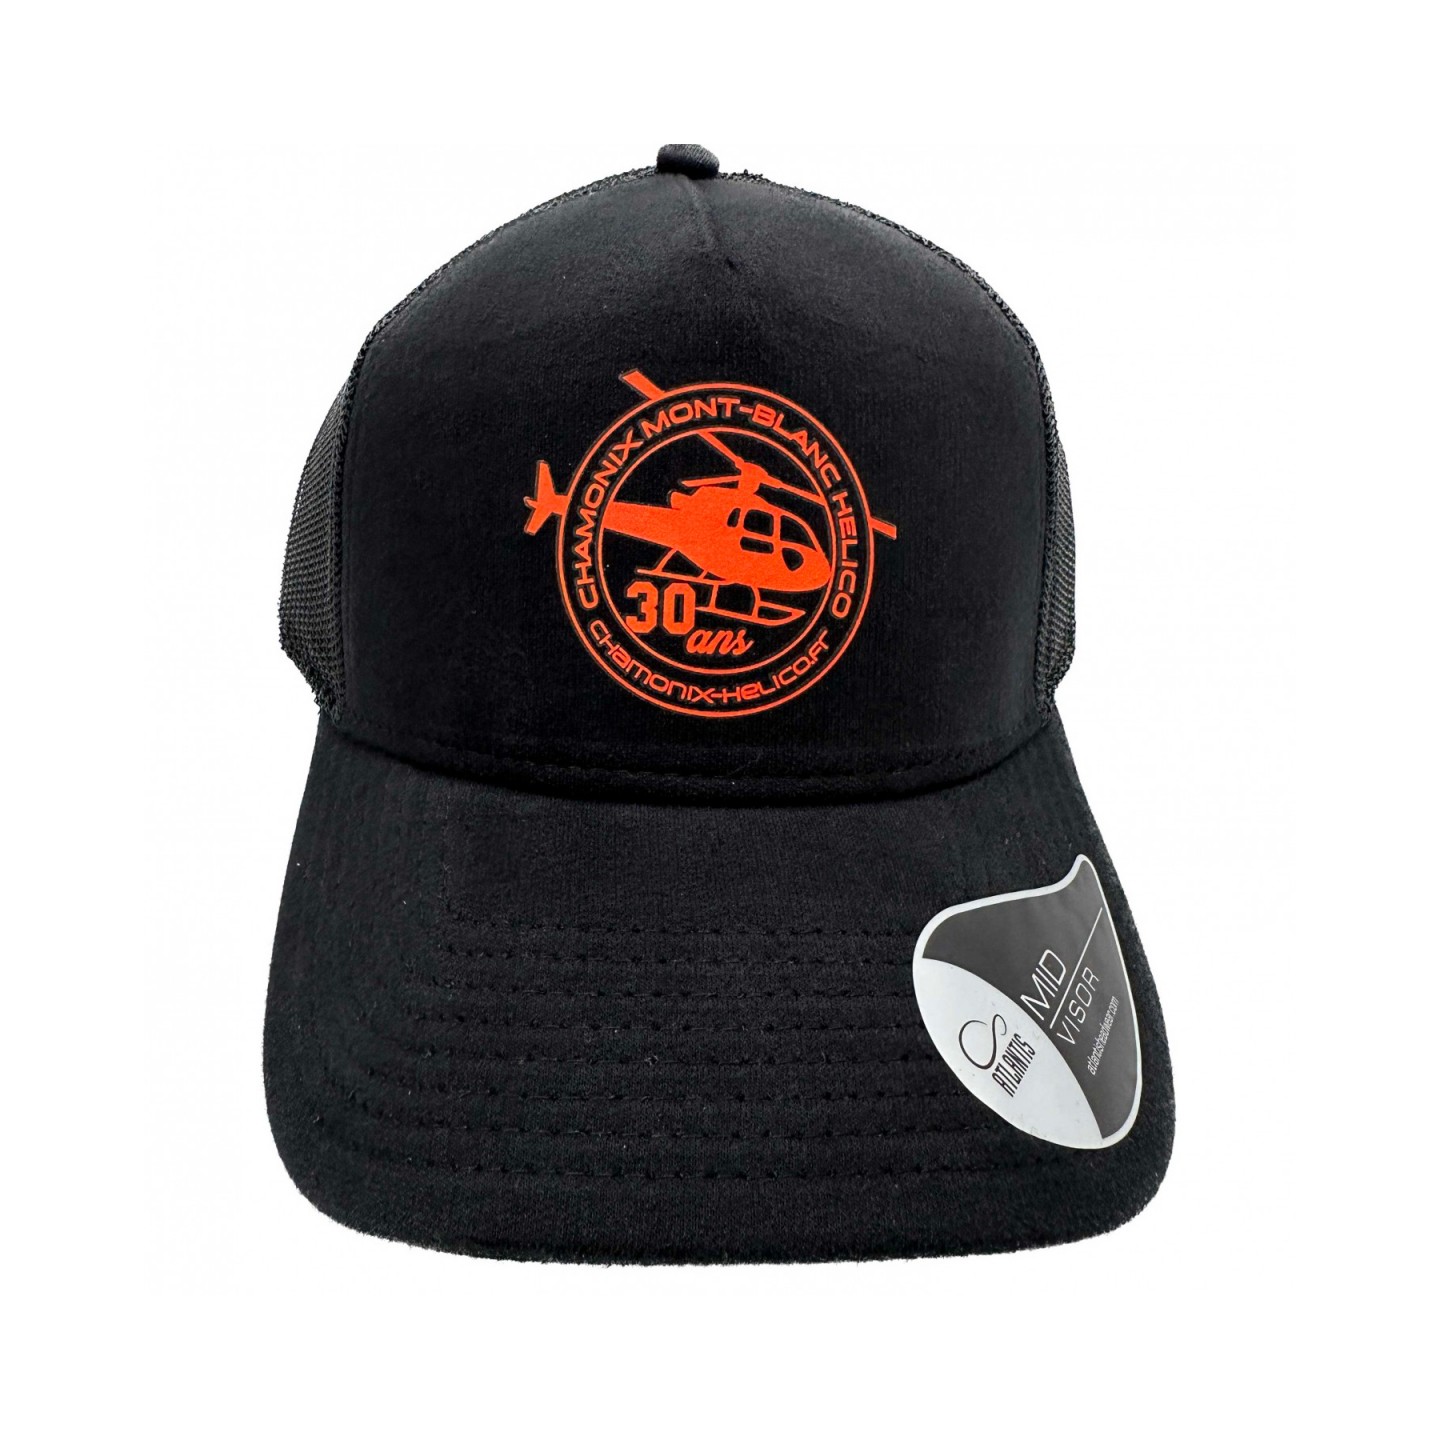 Trucker cap - Black